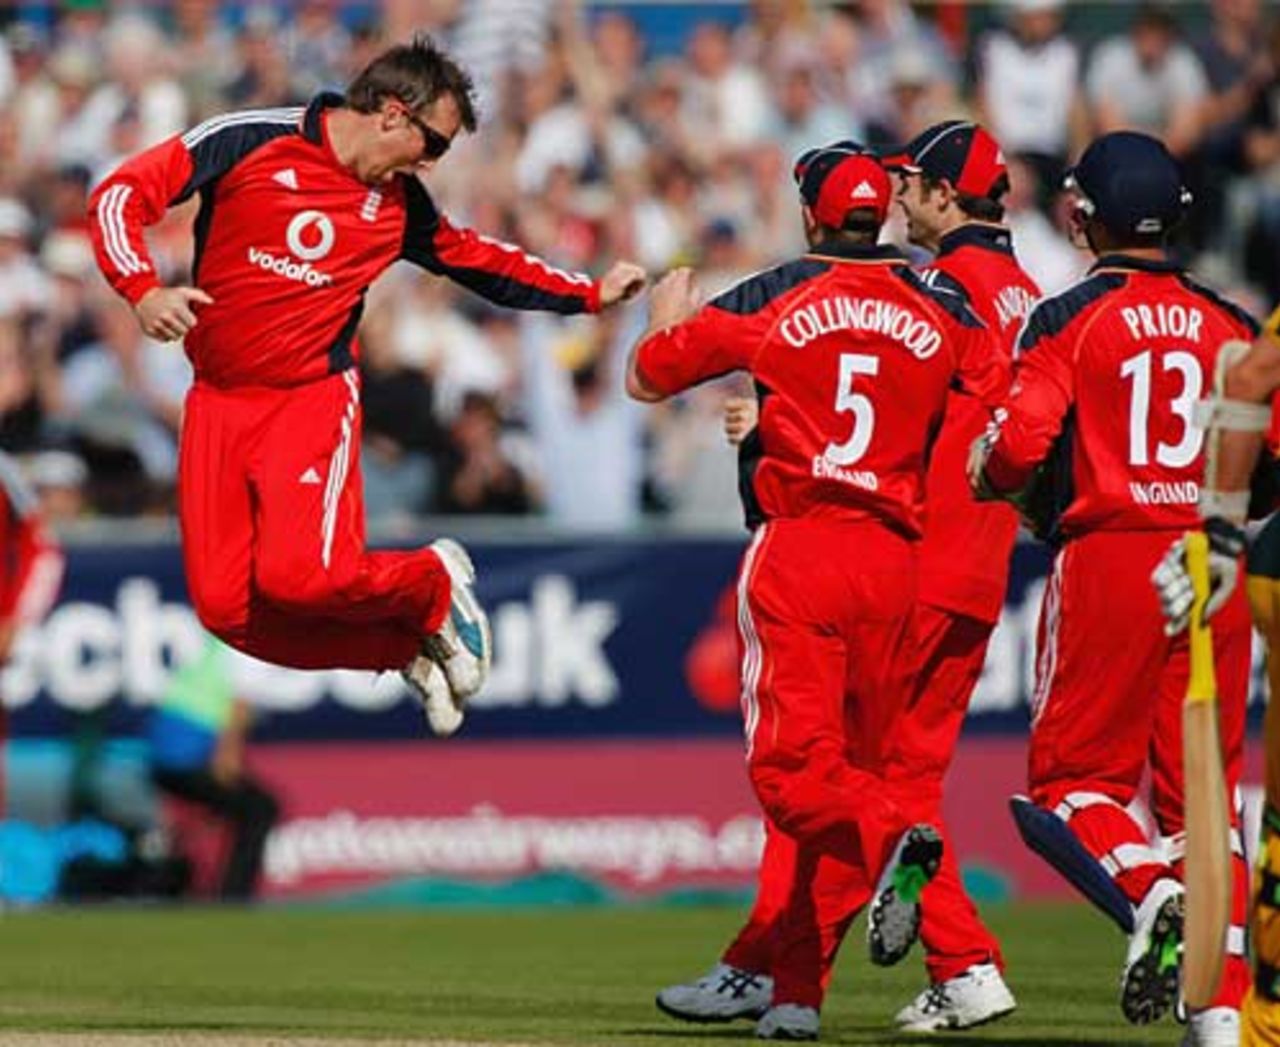 Graeme Swann celebrates his fifth wicket after bowling Brett Lee, England v Australia, 7th ODI, Chester-le-Street, September 20, 2009